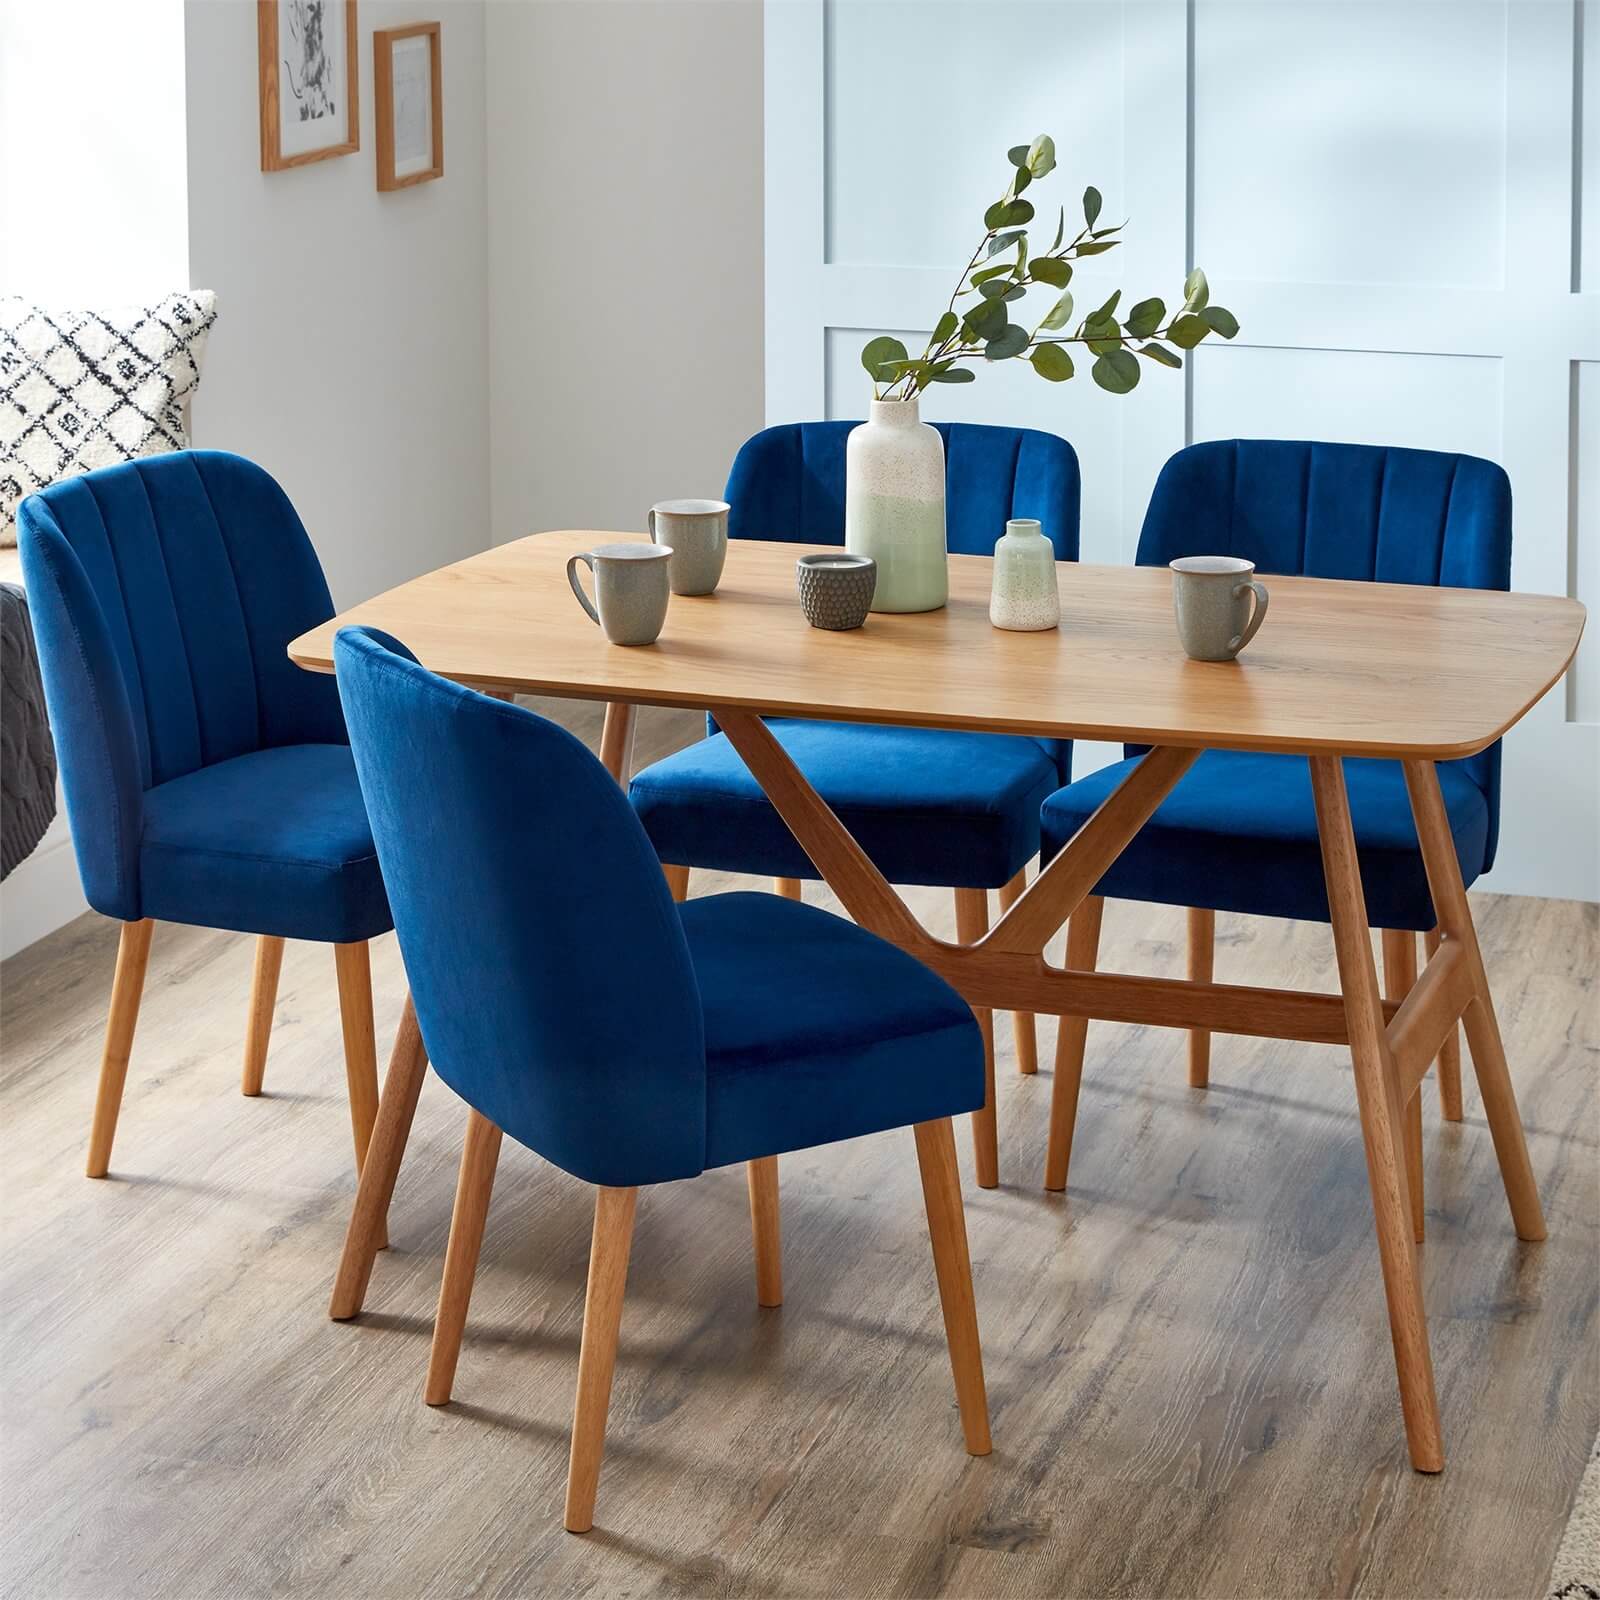 Myra Dining Chairs - Set of 2 - Midnight Blue